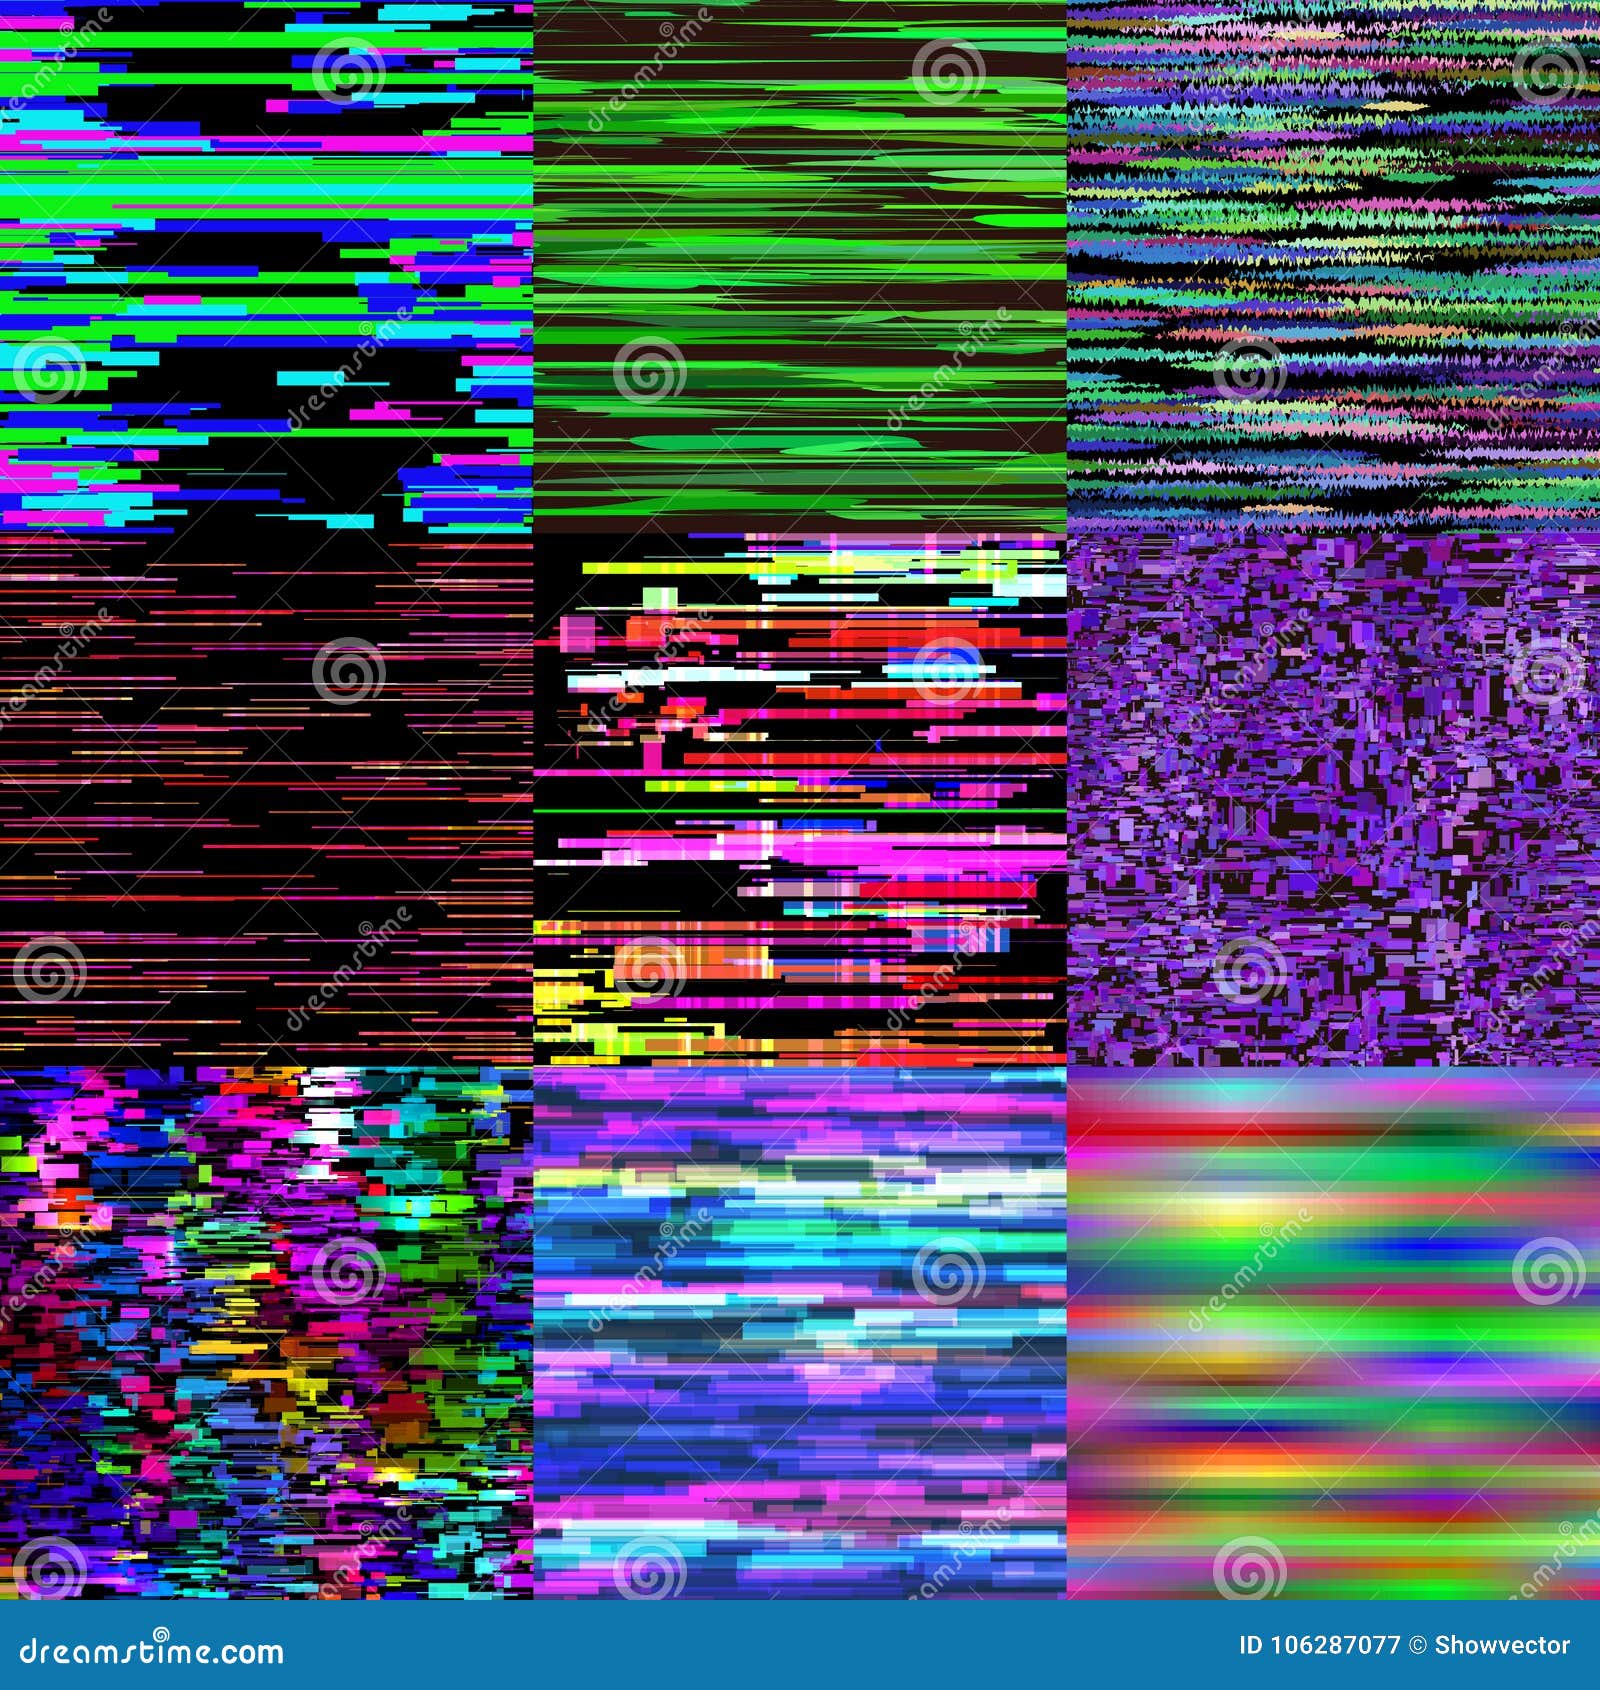 computer glitch texture